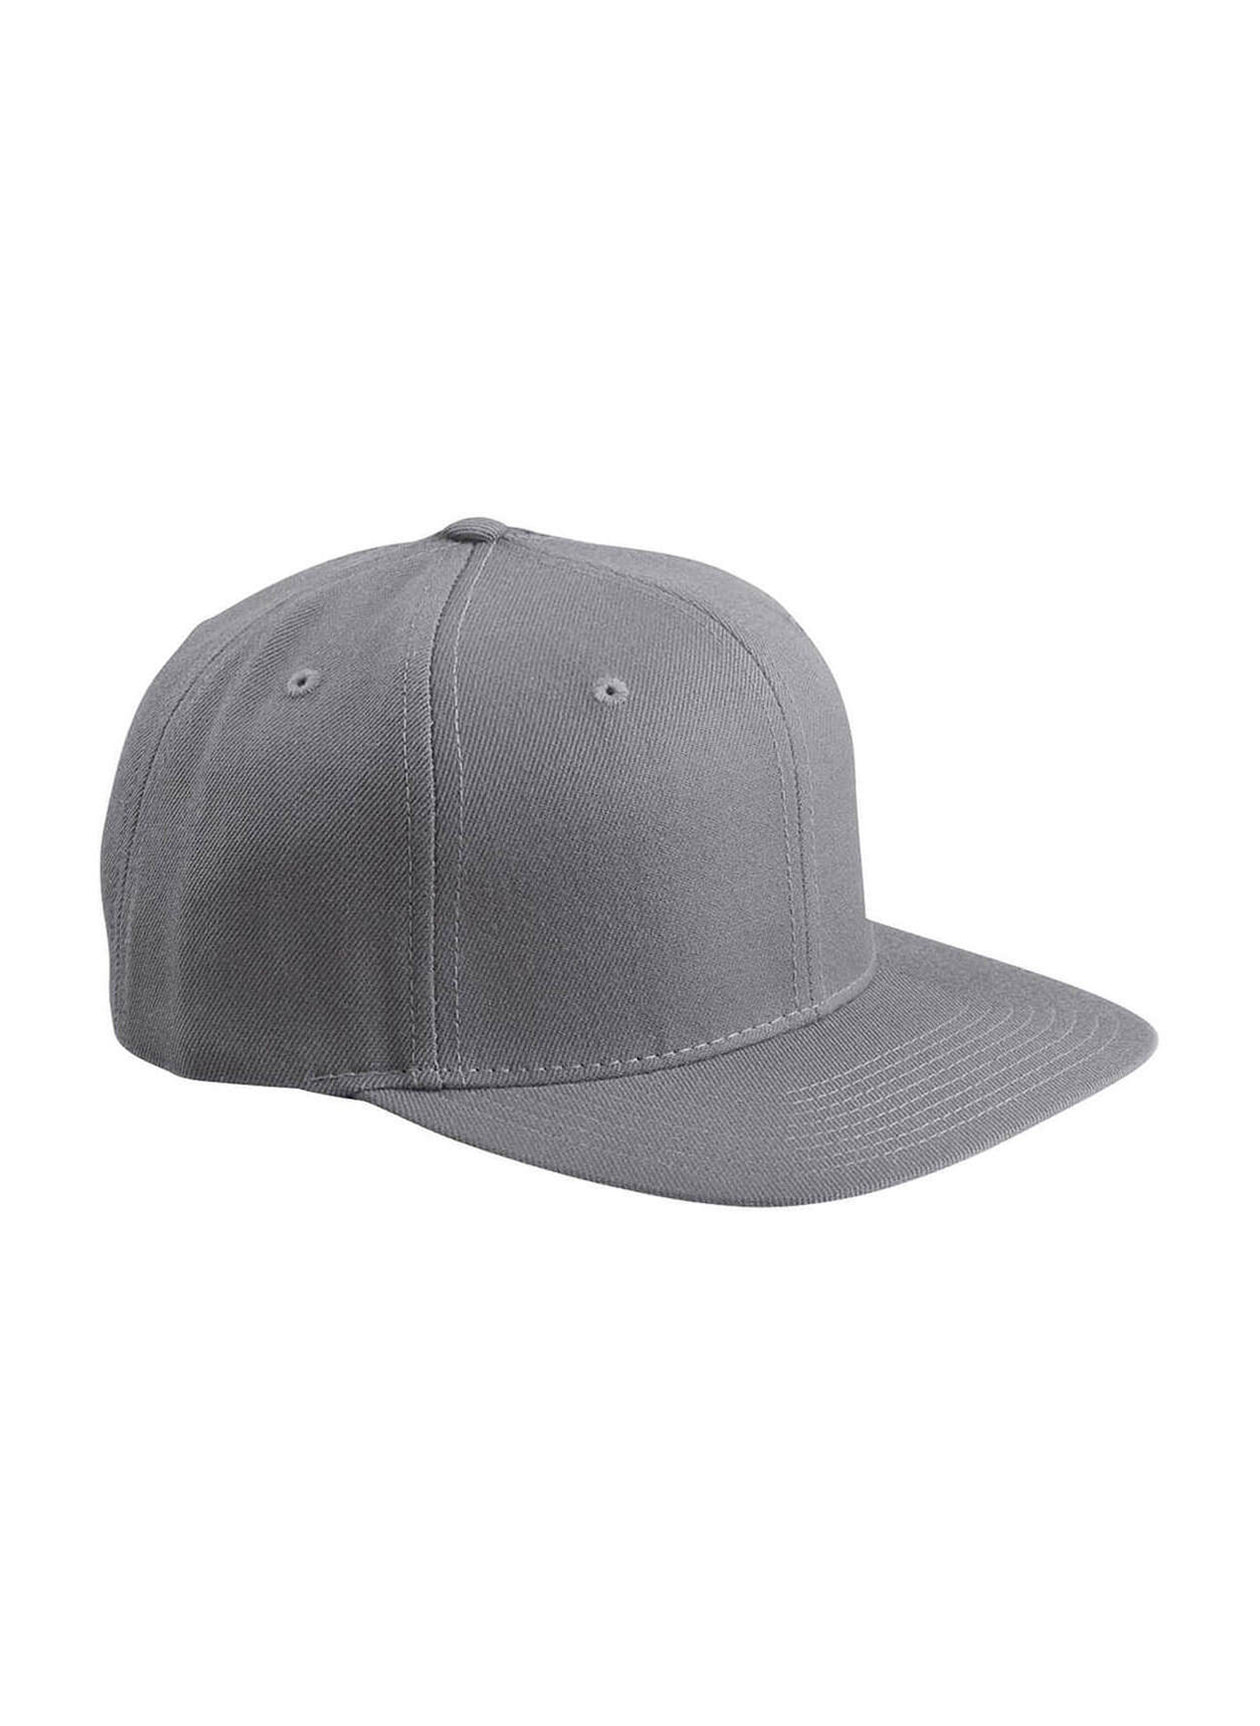 Yupoong Dark Grey 6-Panel Structured Flat Visor Classic Snapback Hat